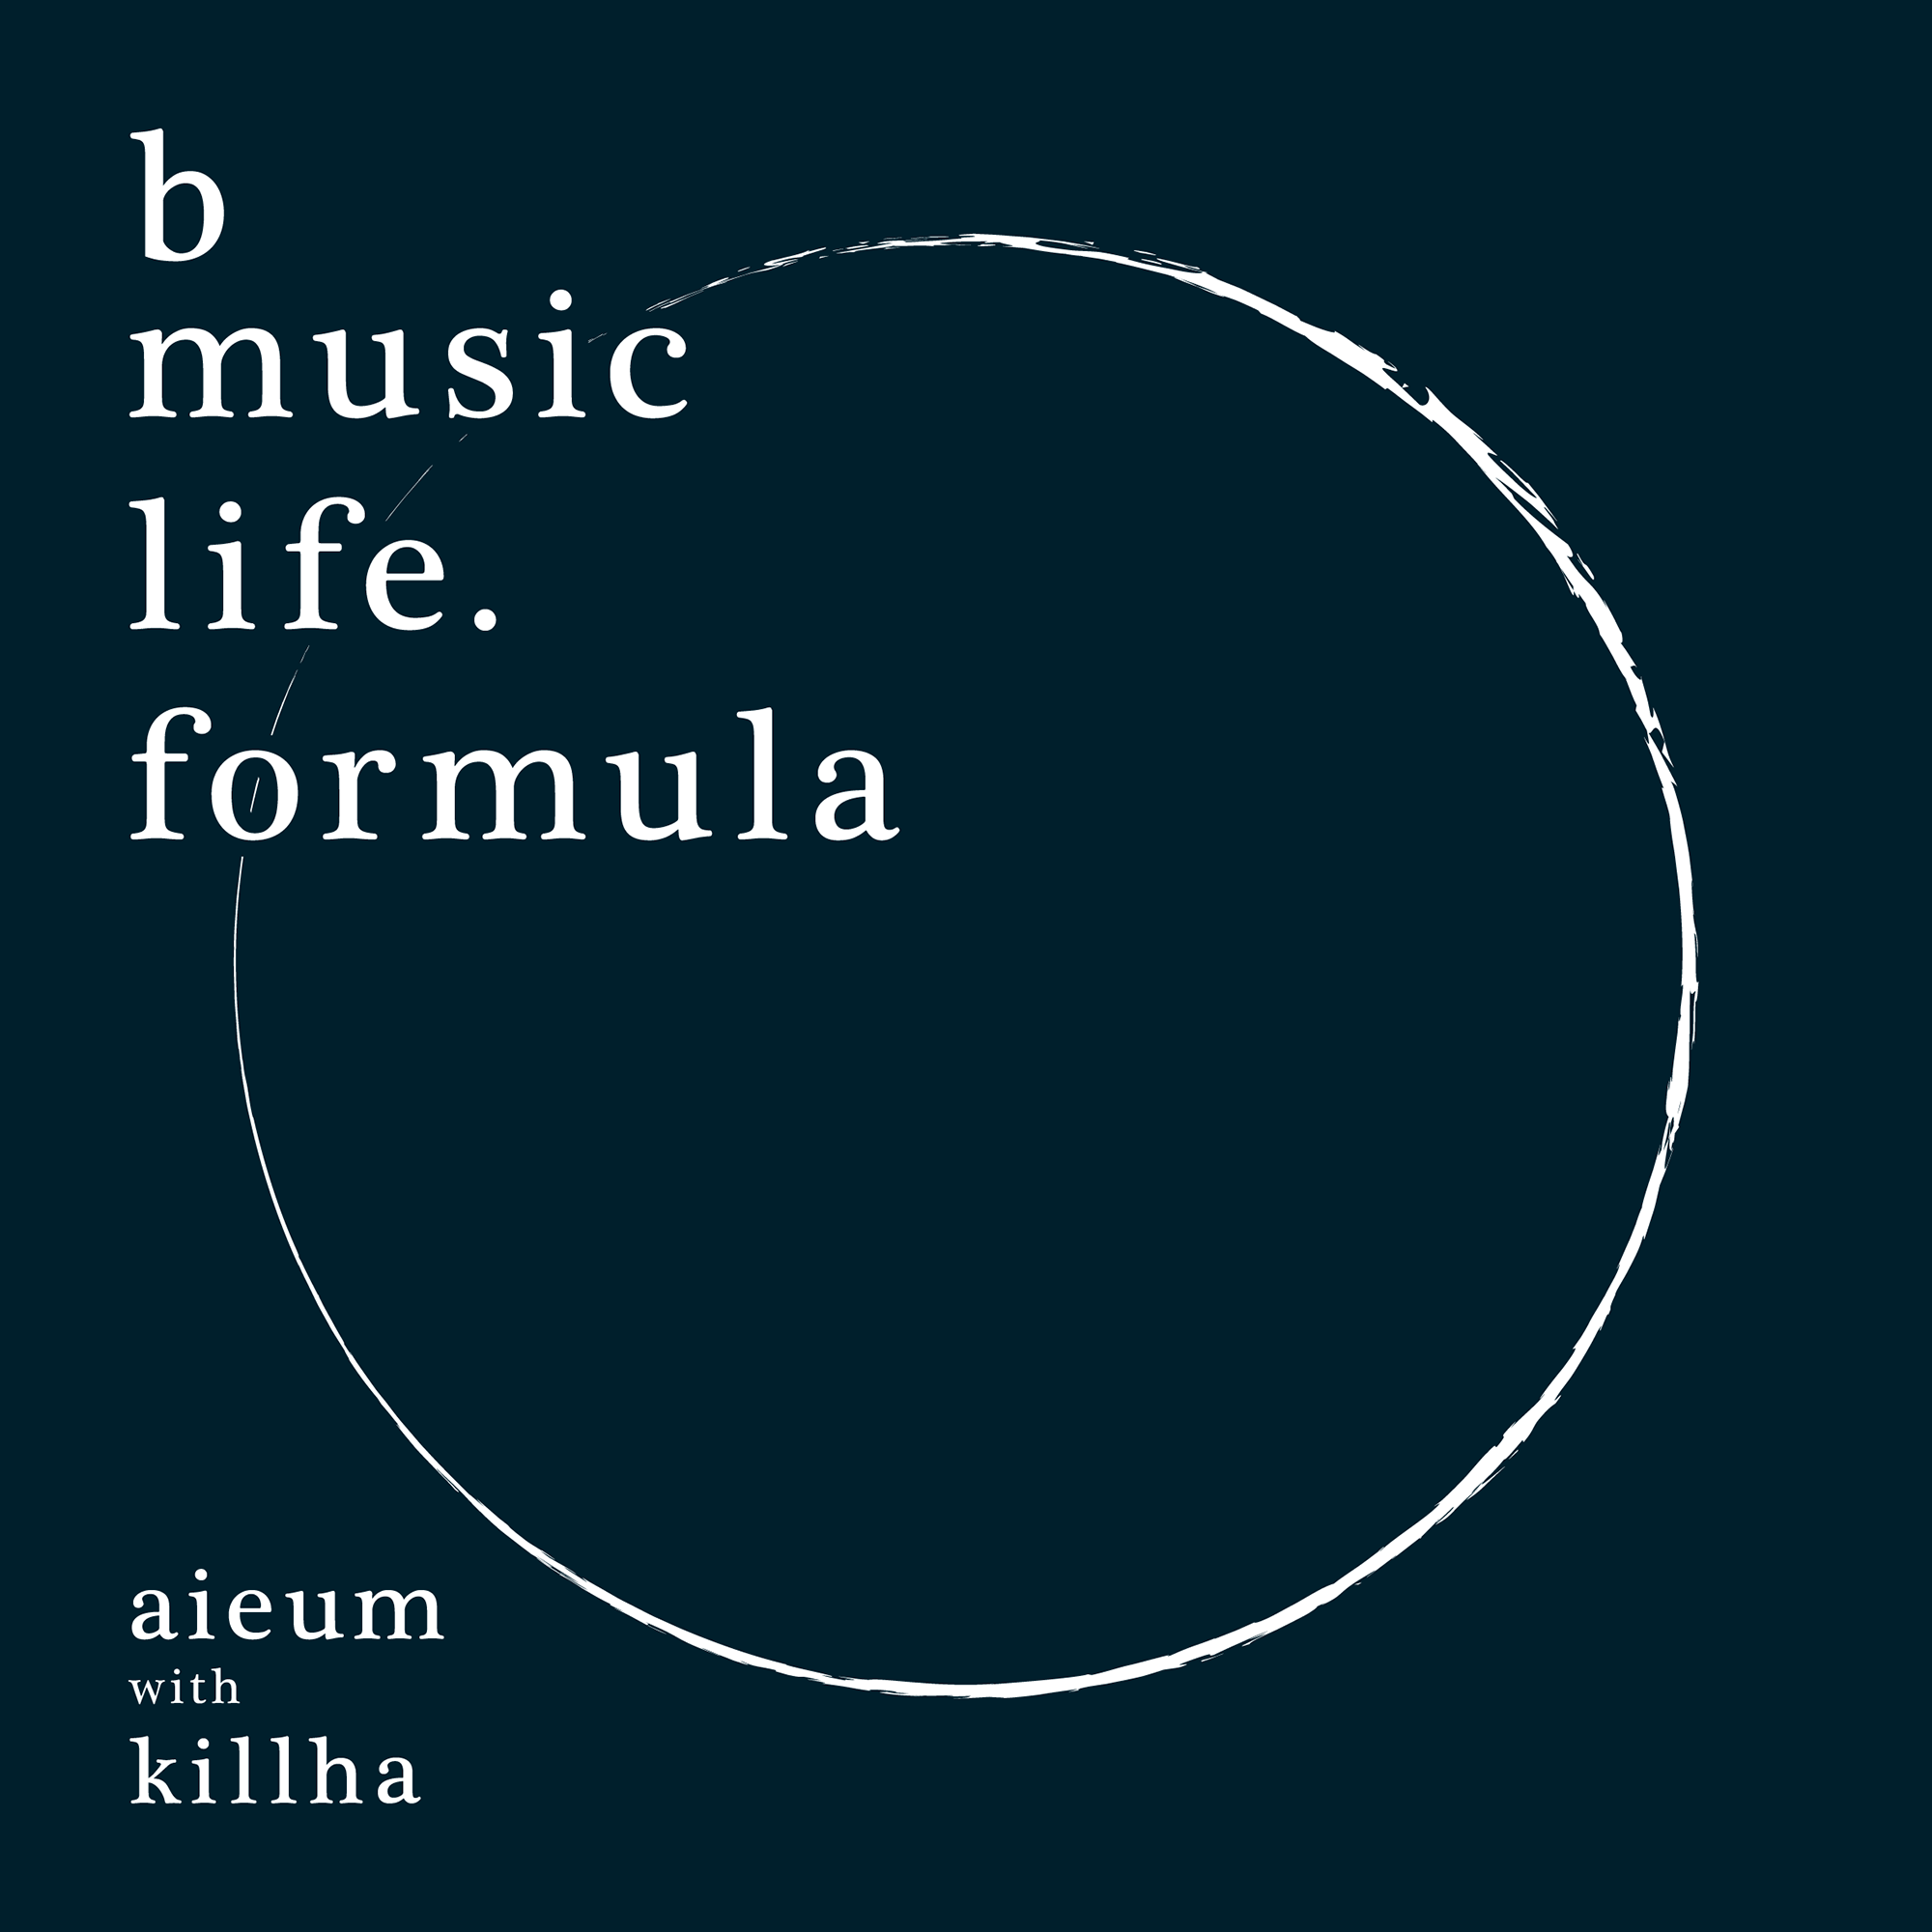 b music life. formula